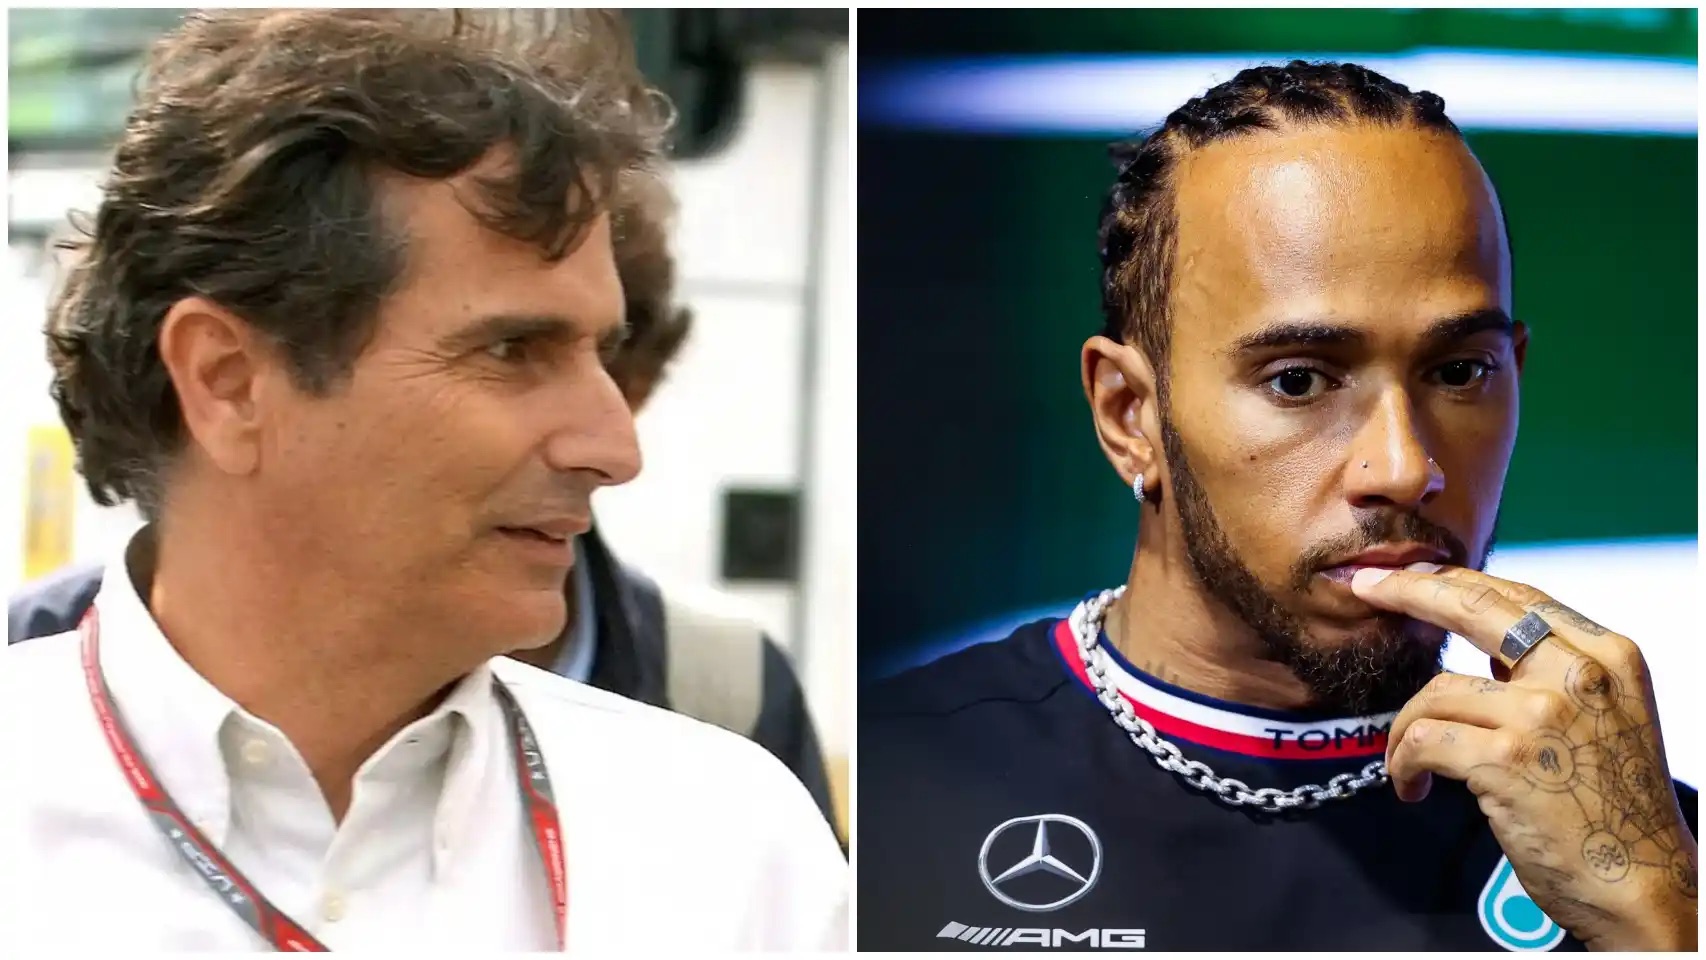 Piquet multado con 880.000 euros por insultos racistas hacia Hamilton